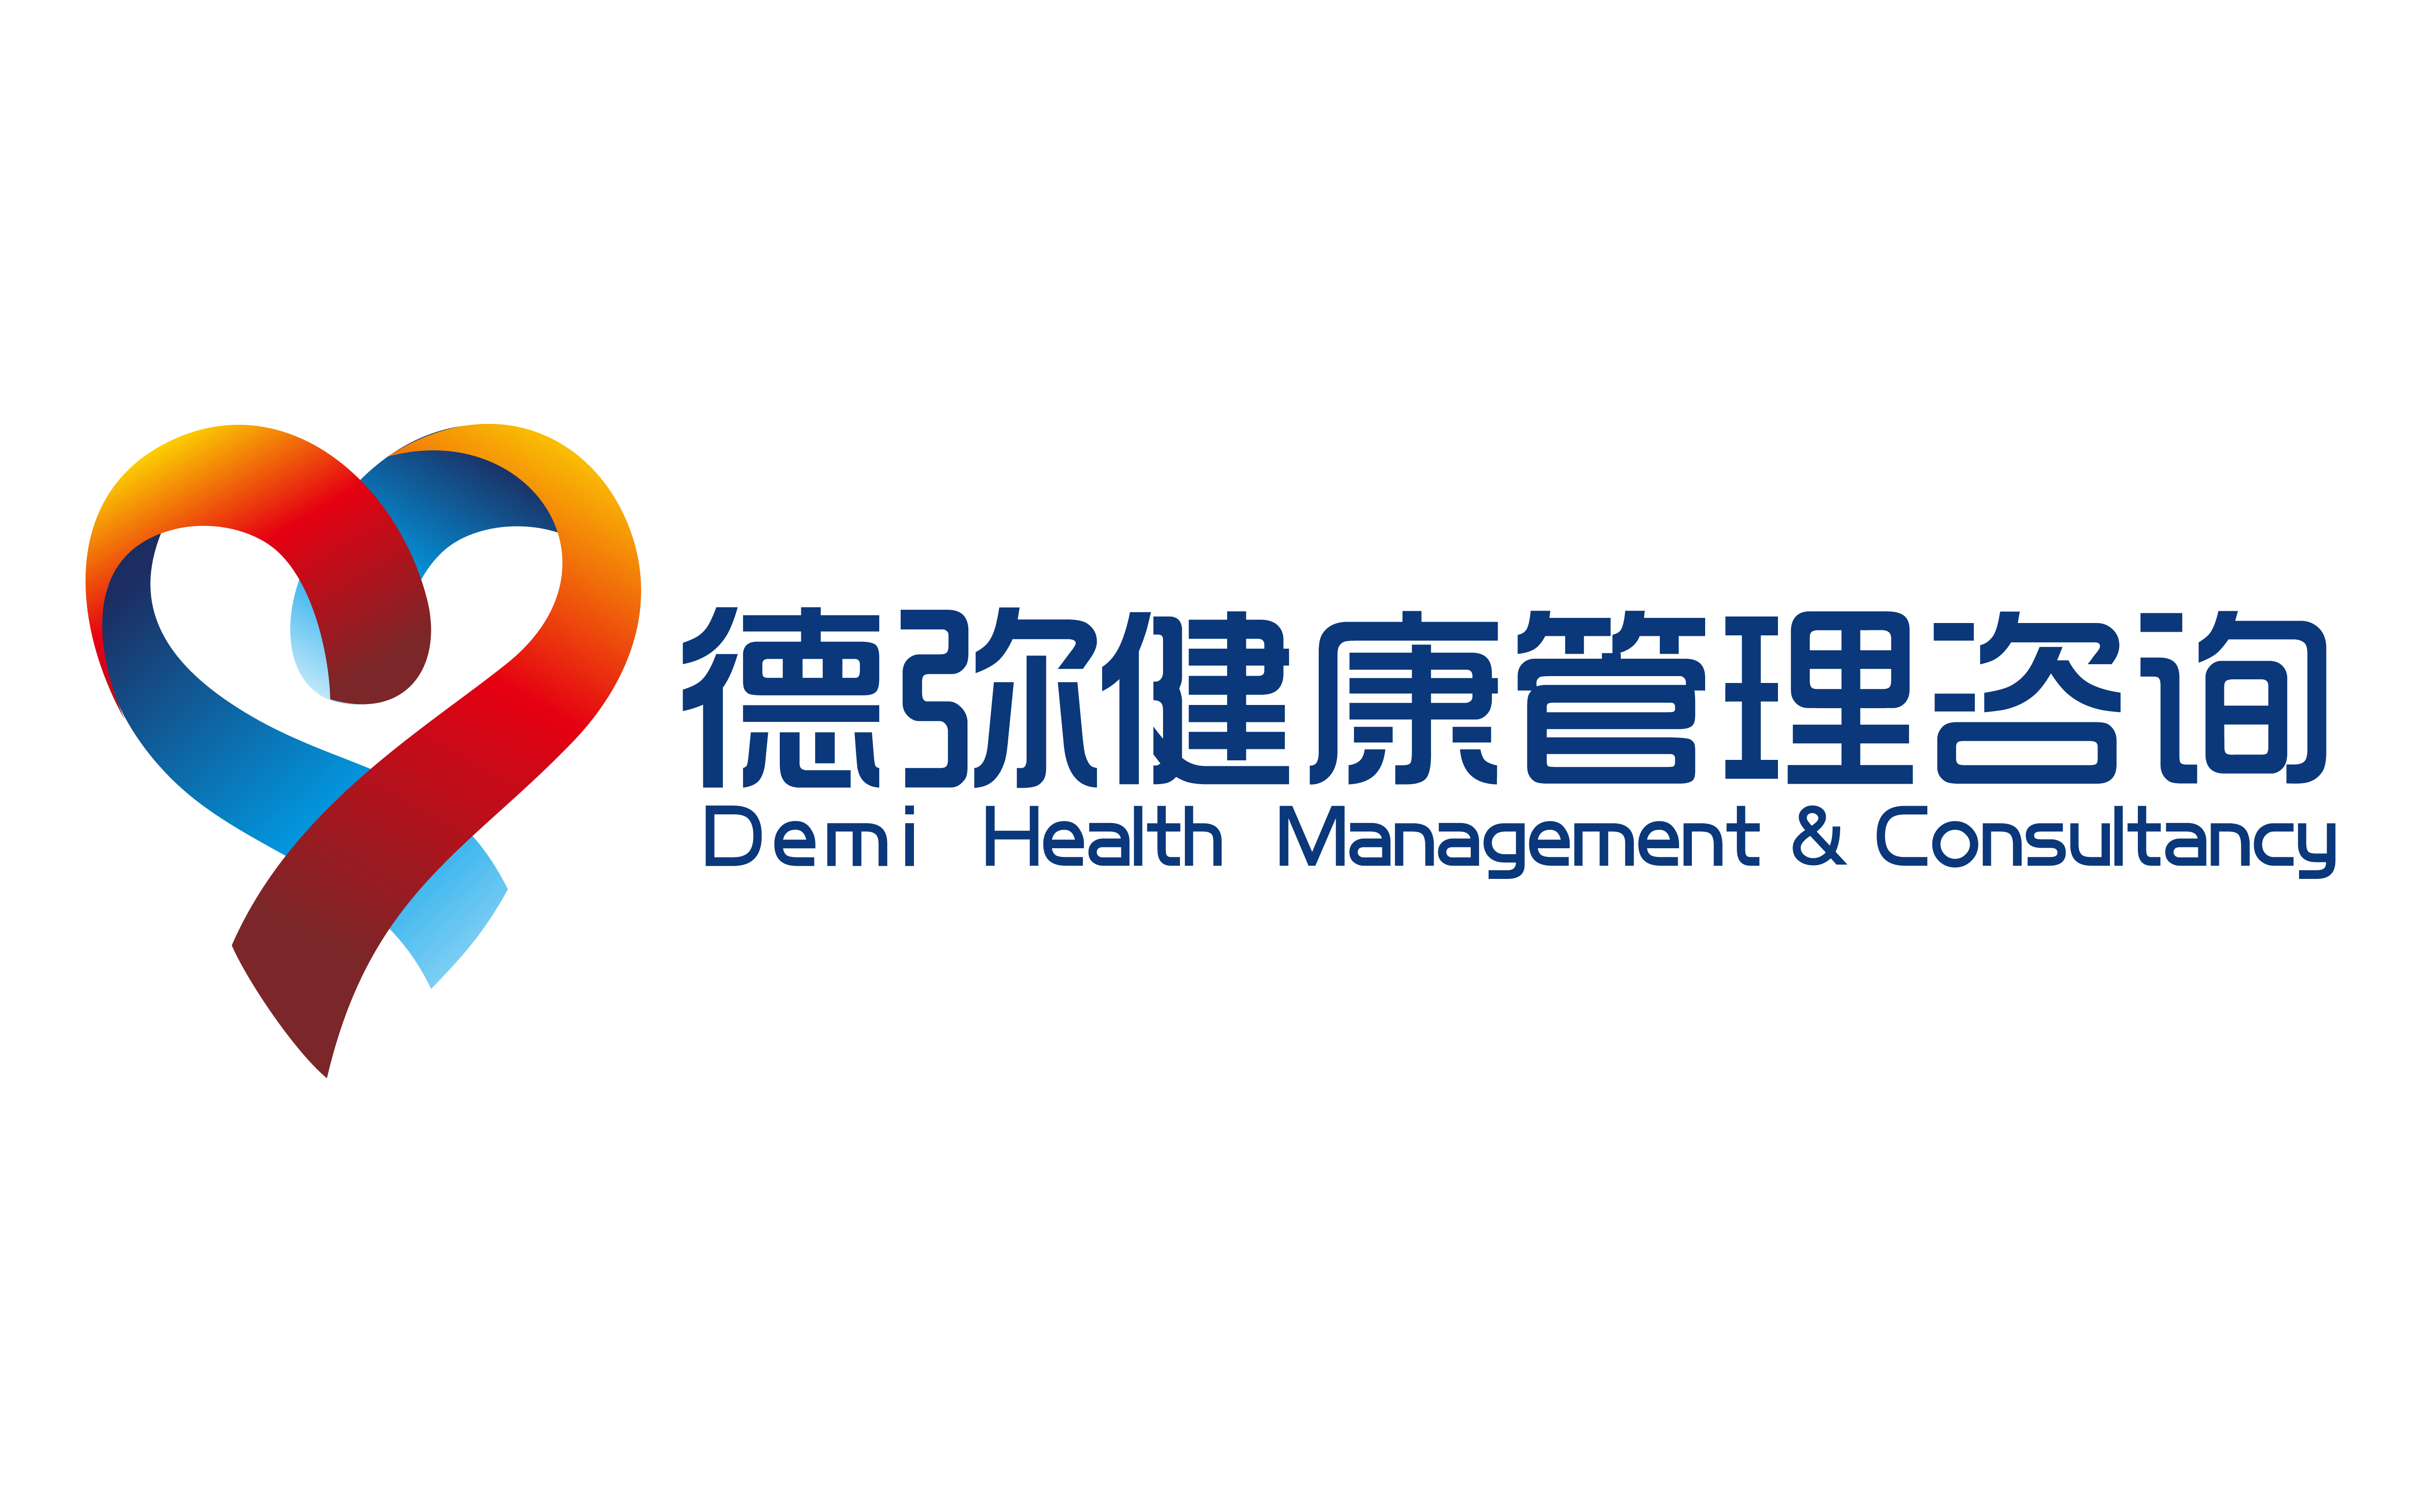 Swiss International Health Care becomes joint venture partner of Shanghai Demi Health Management & Consultancy Co., Ltd.